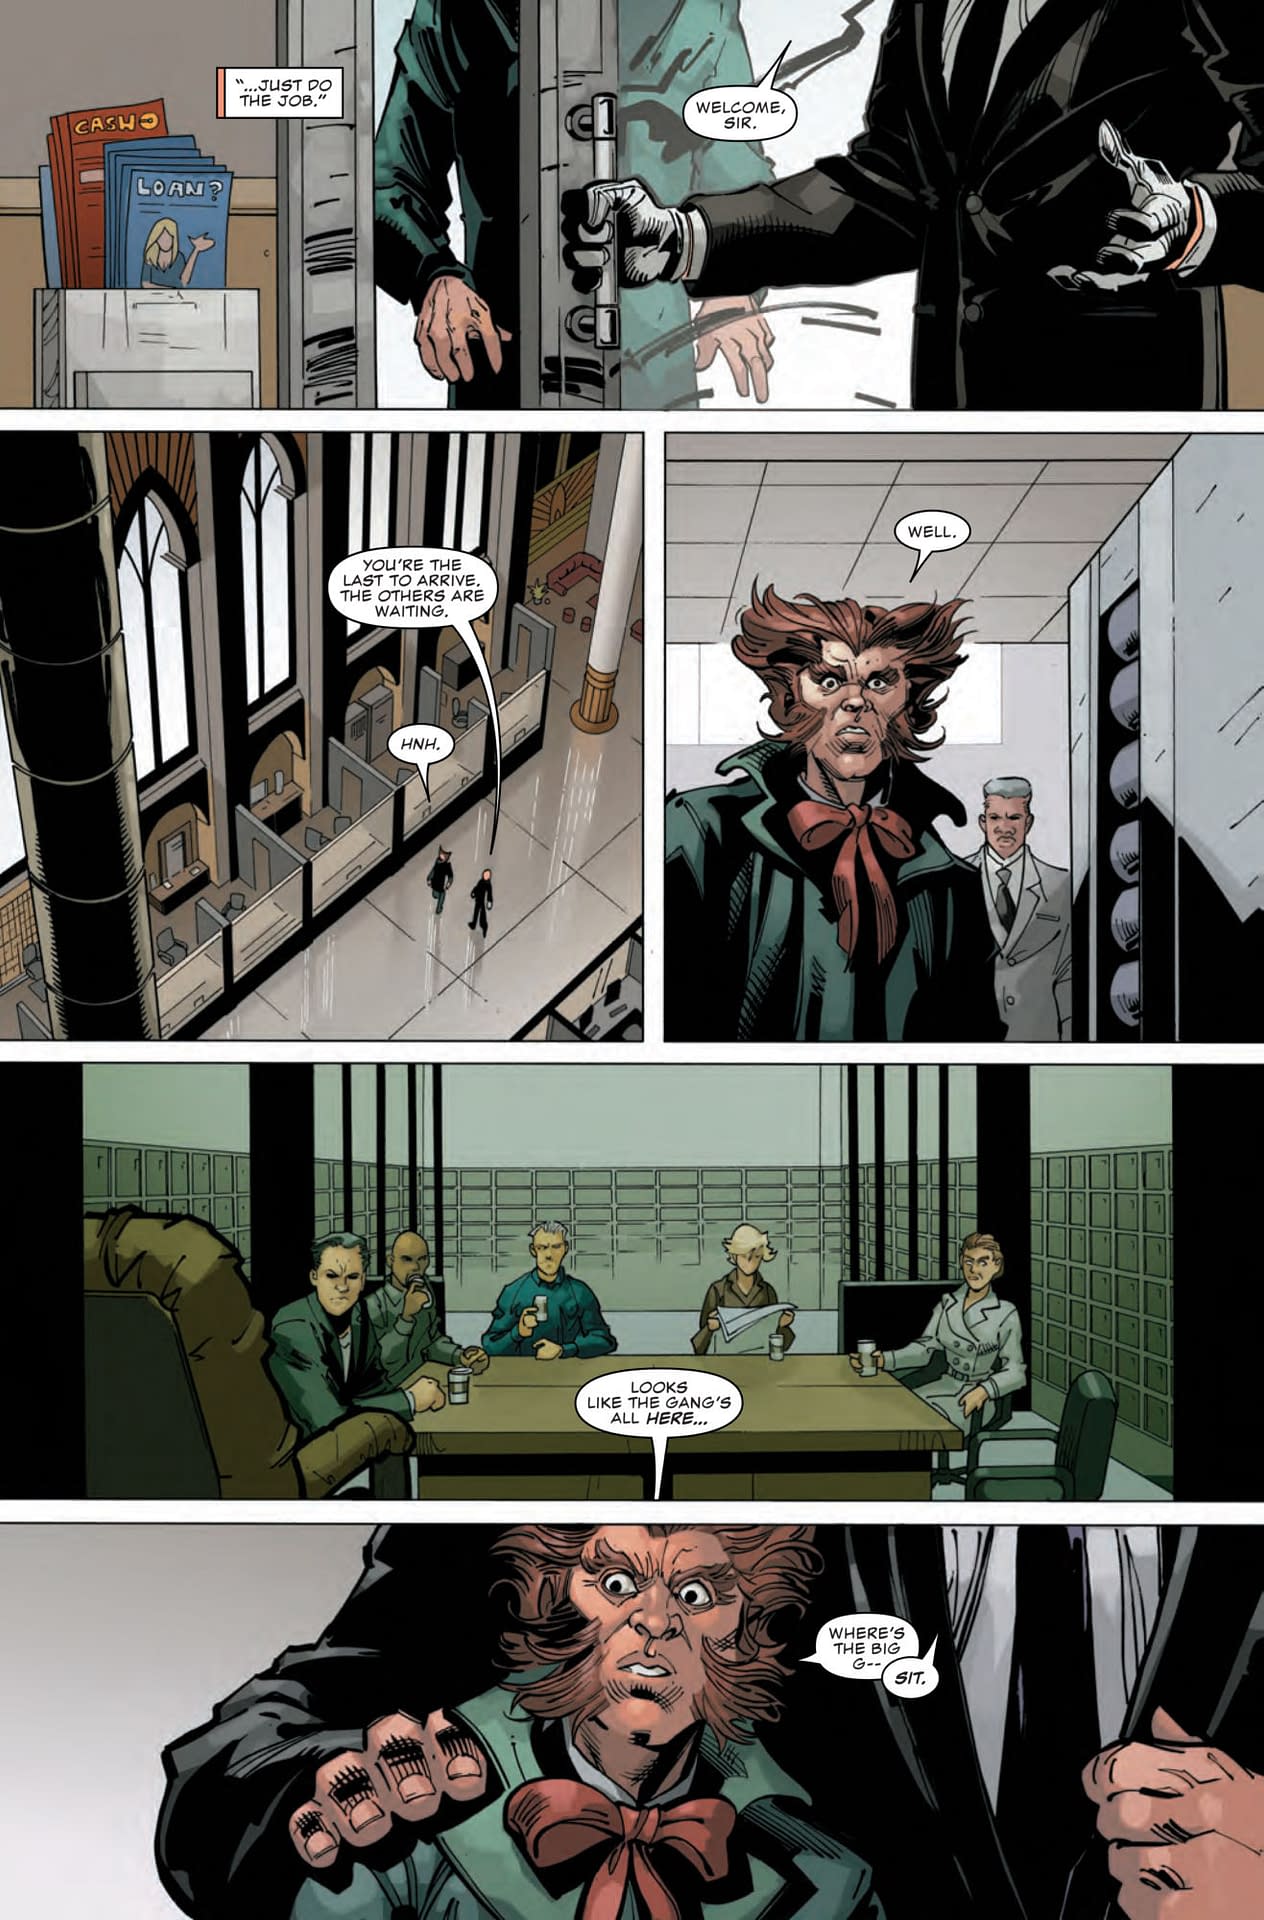 The Privilege of the Kingpin in Daredevil #7 (Preview)